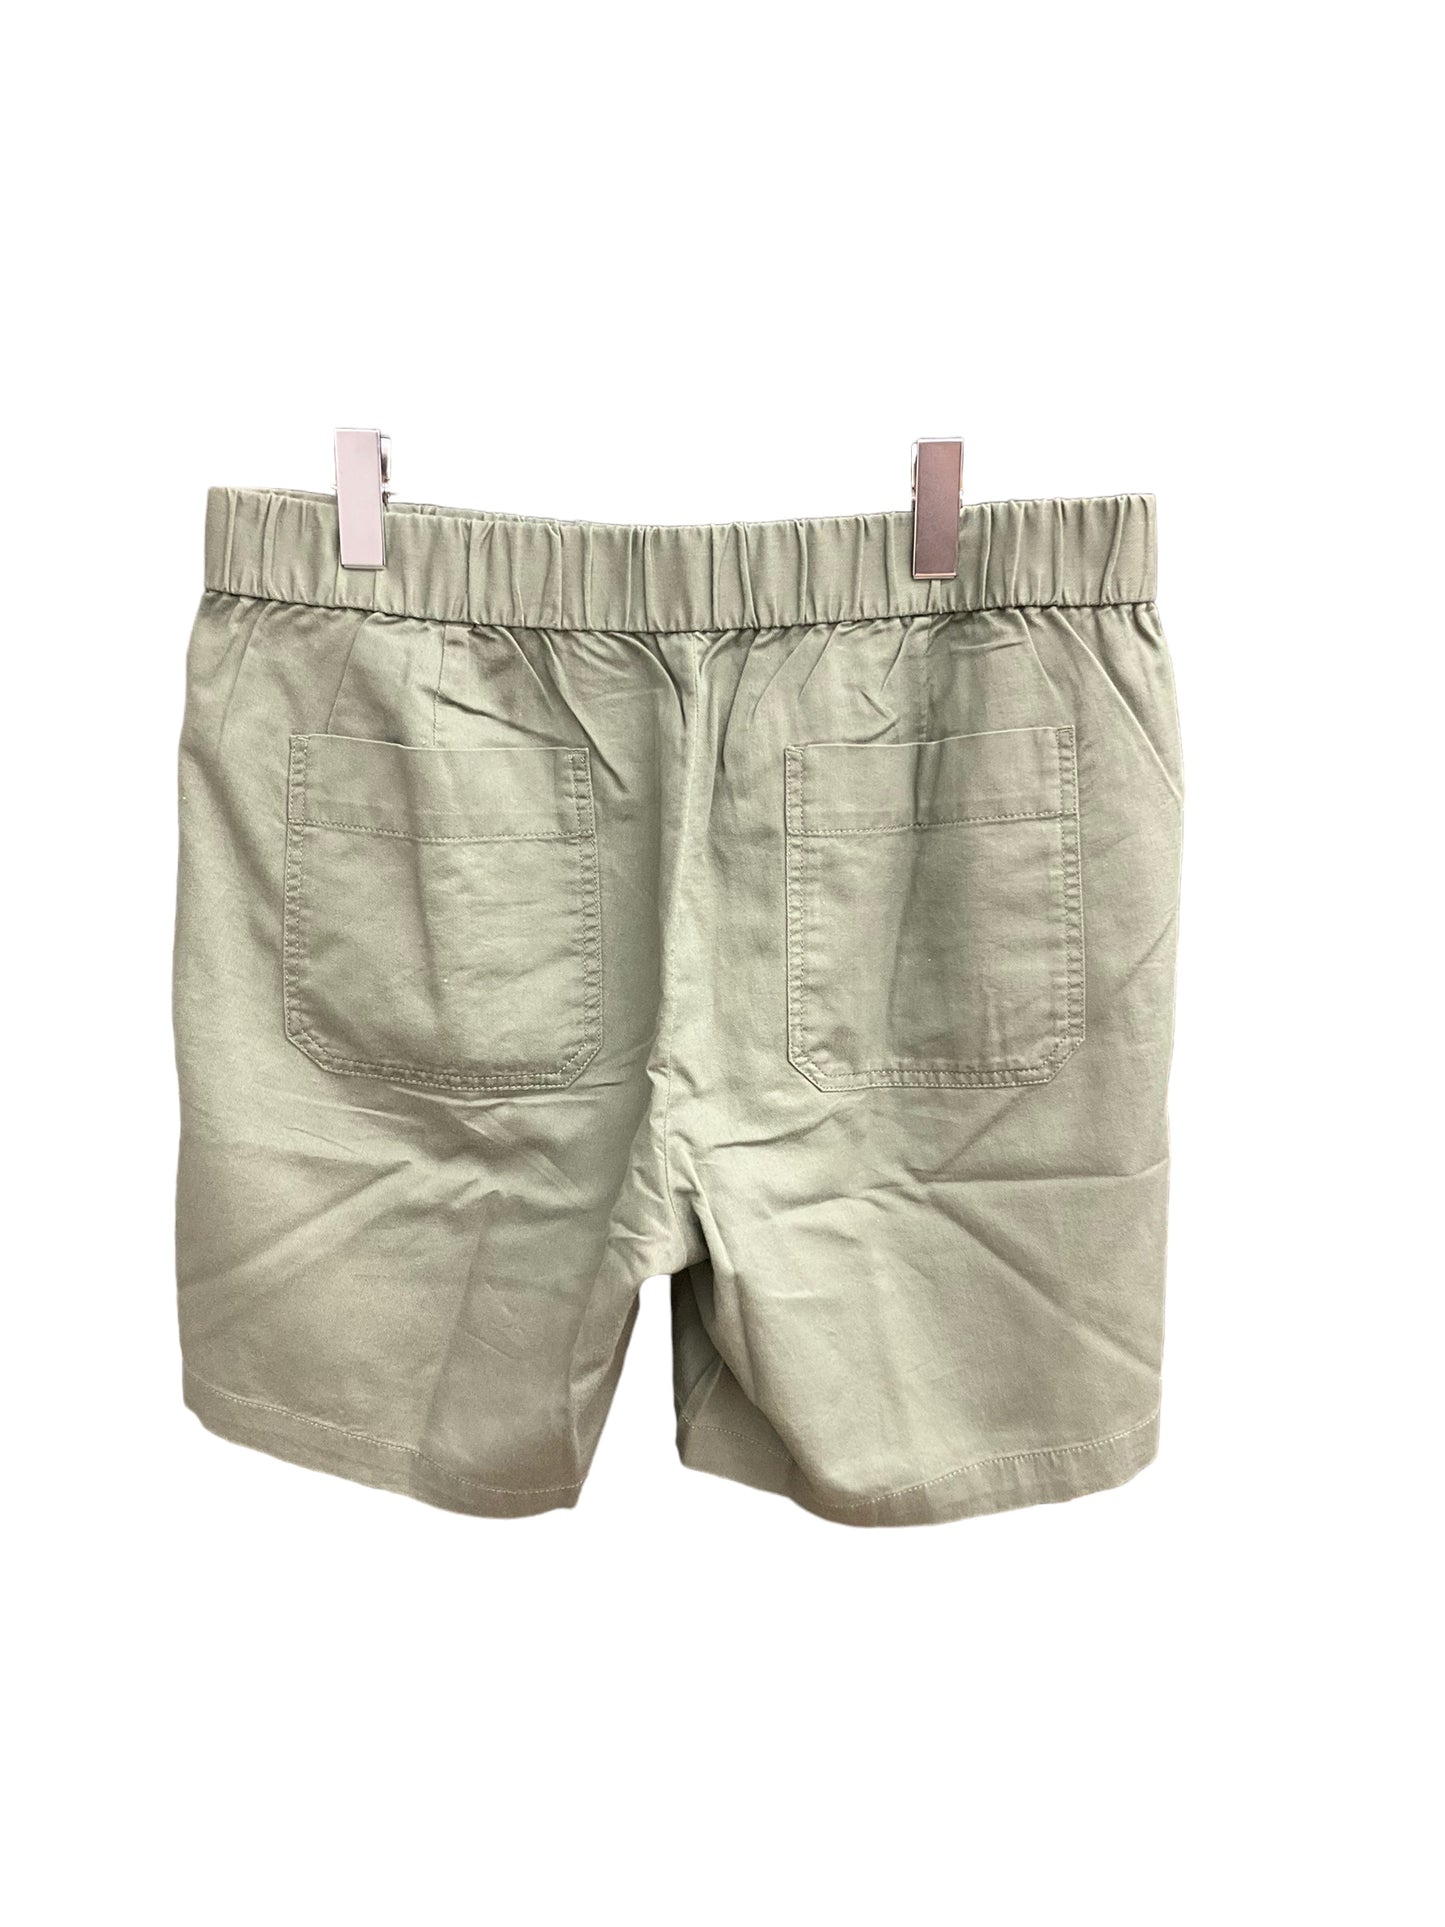 Shorts By Talbots  Size: 18